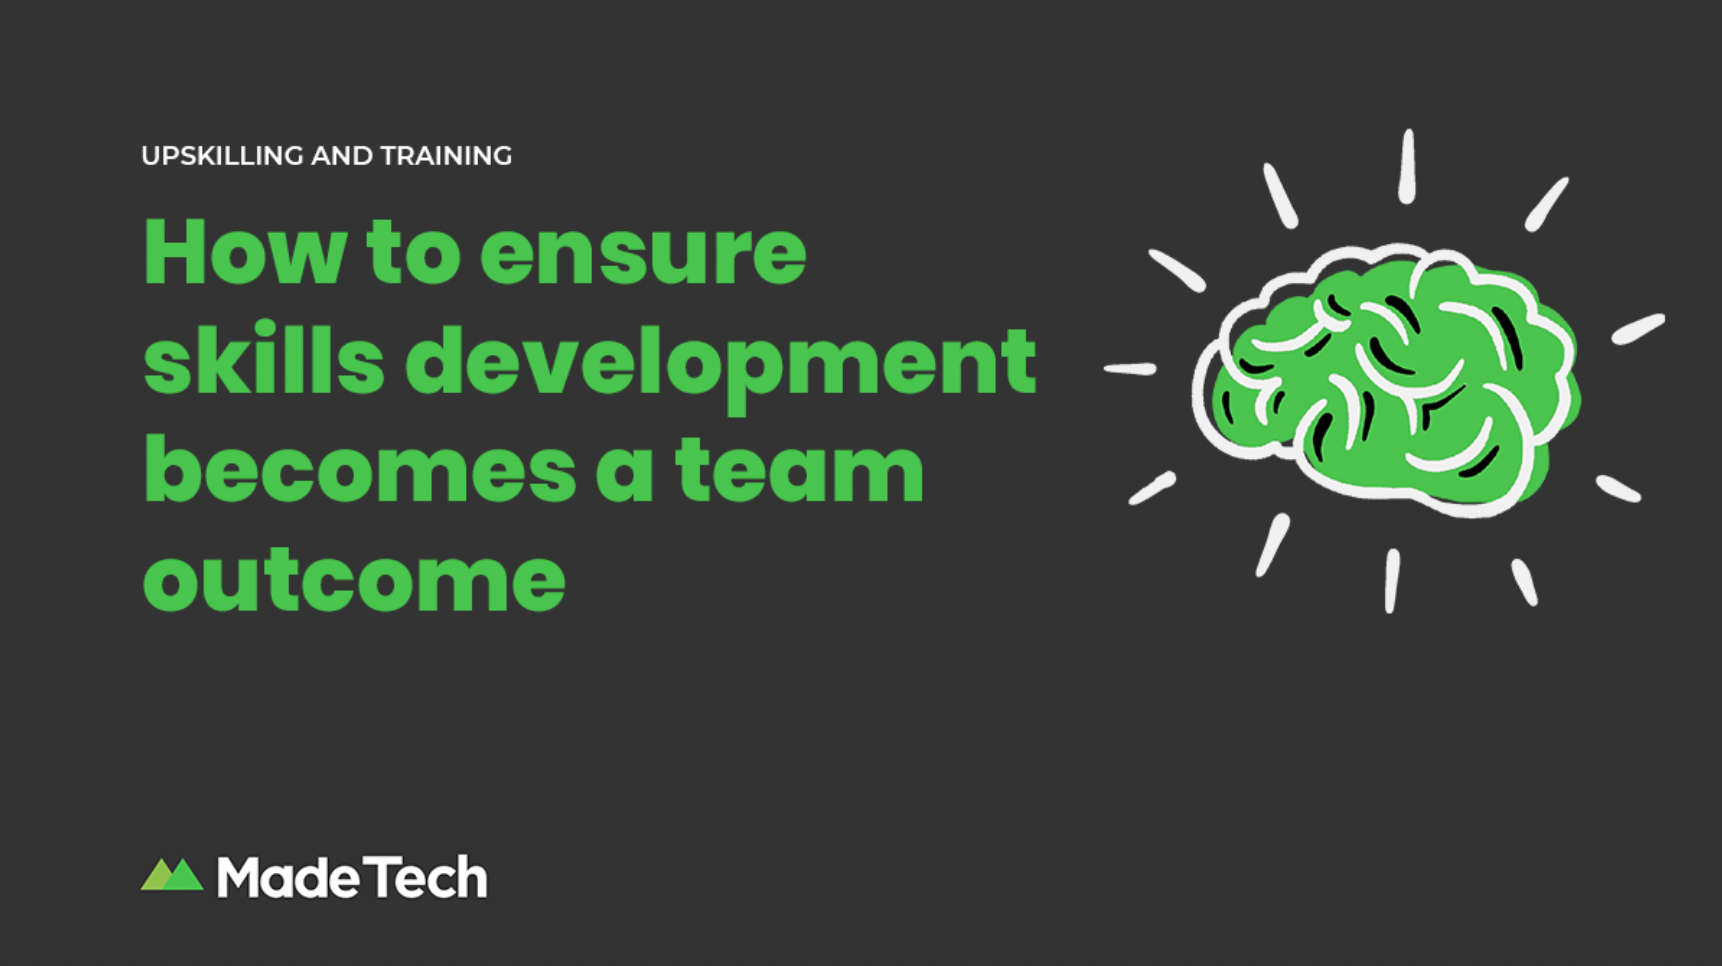 How to ensure skills development becomes a team outcome